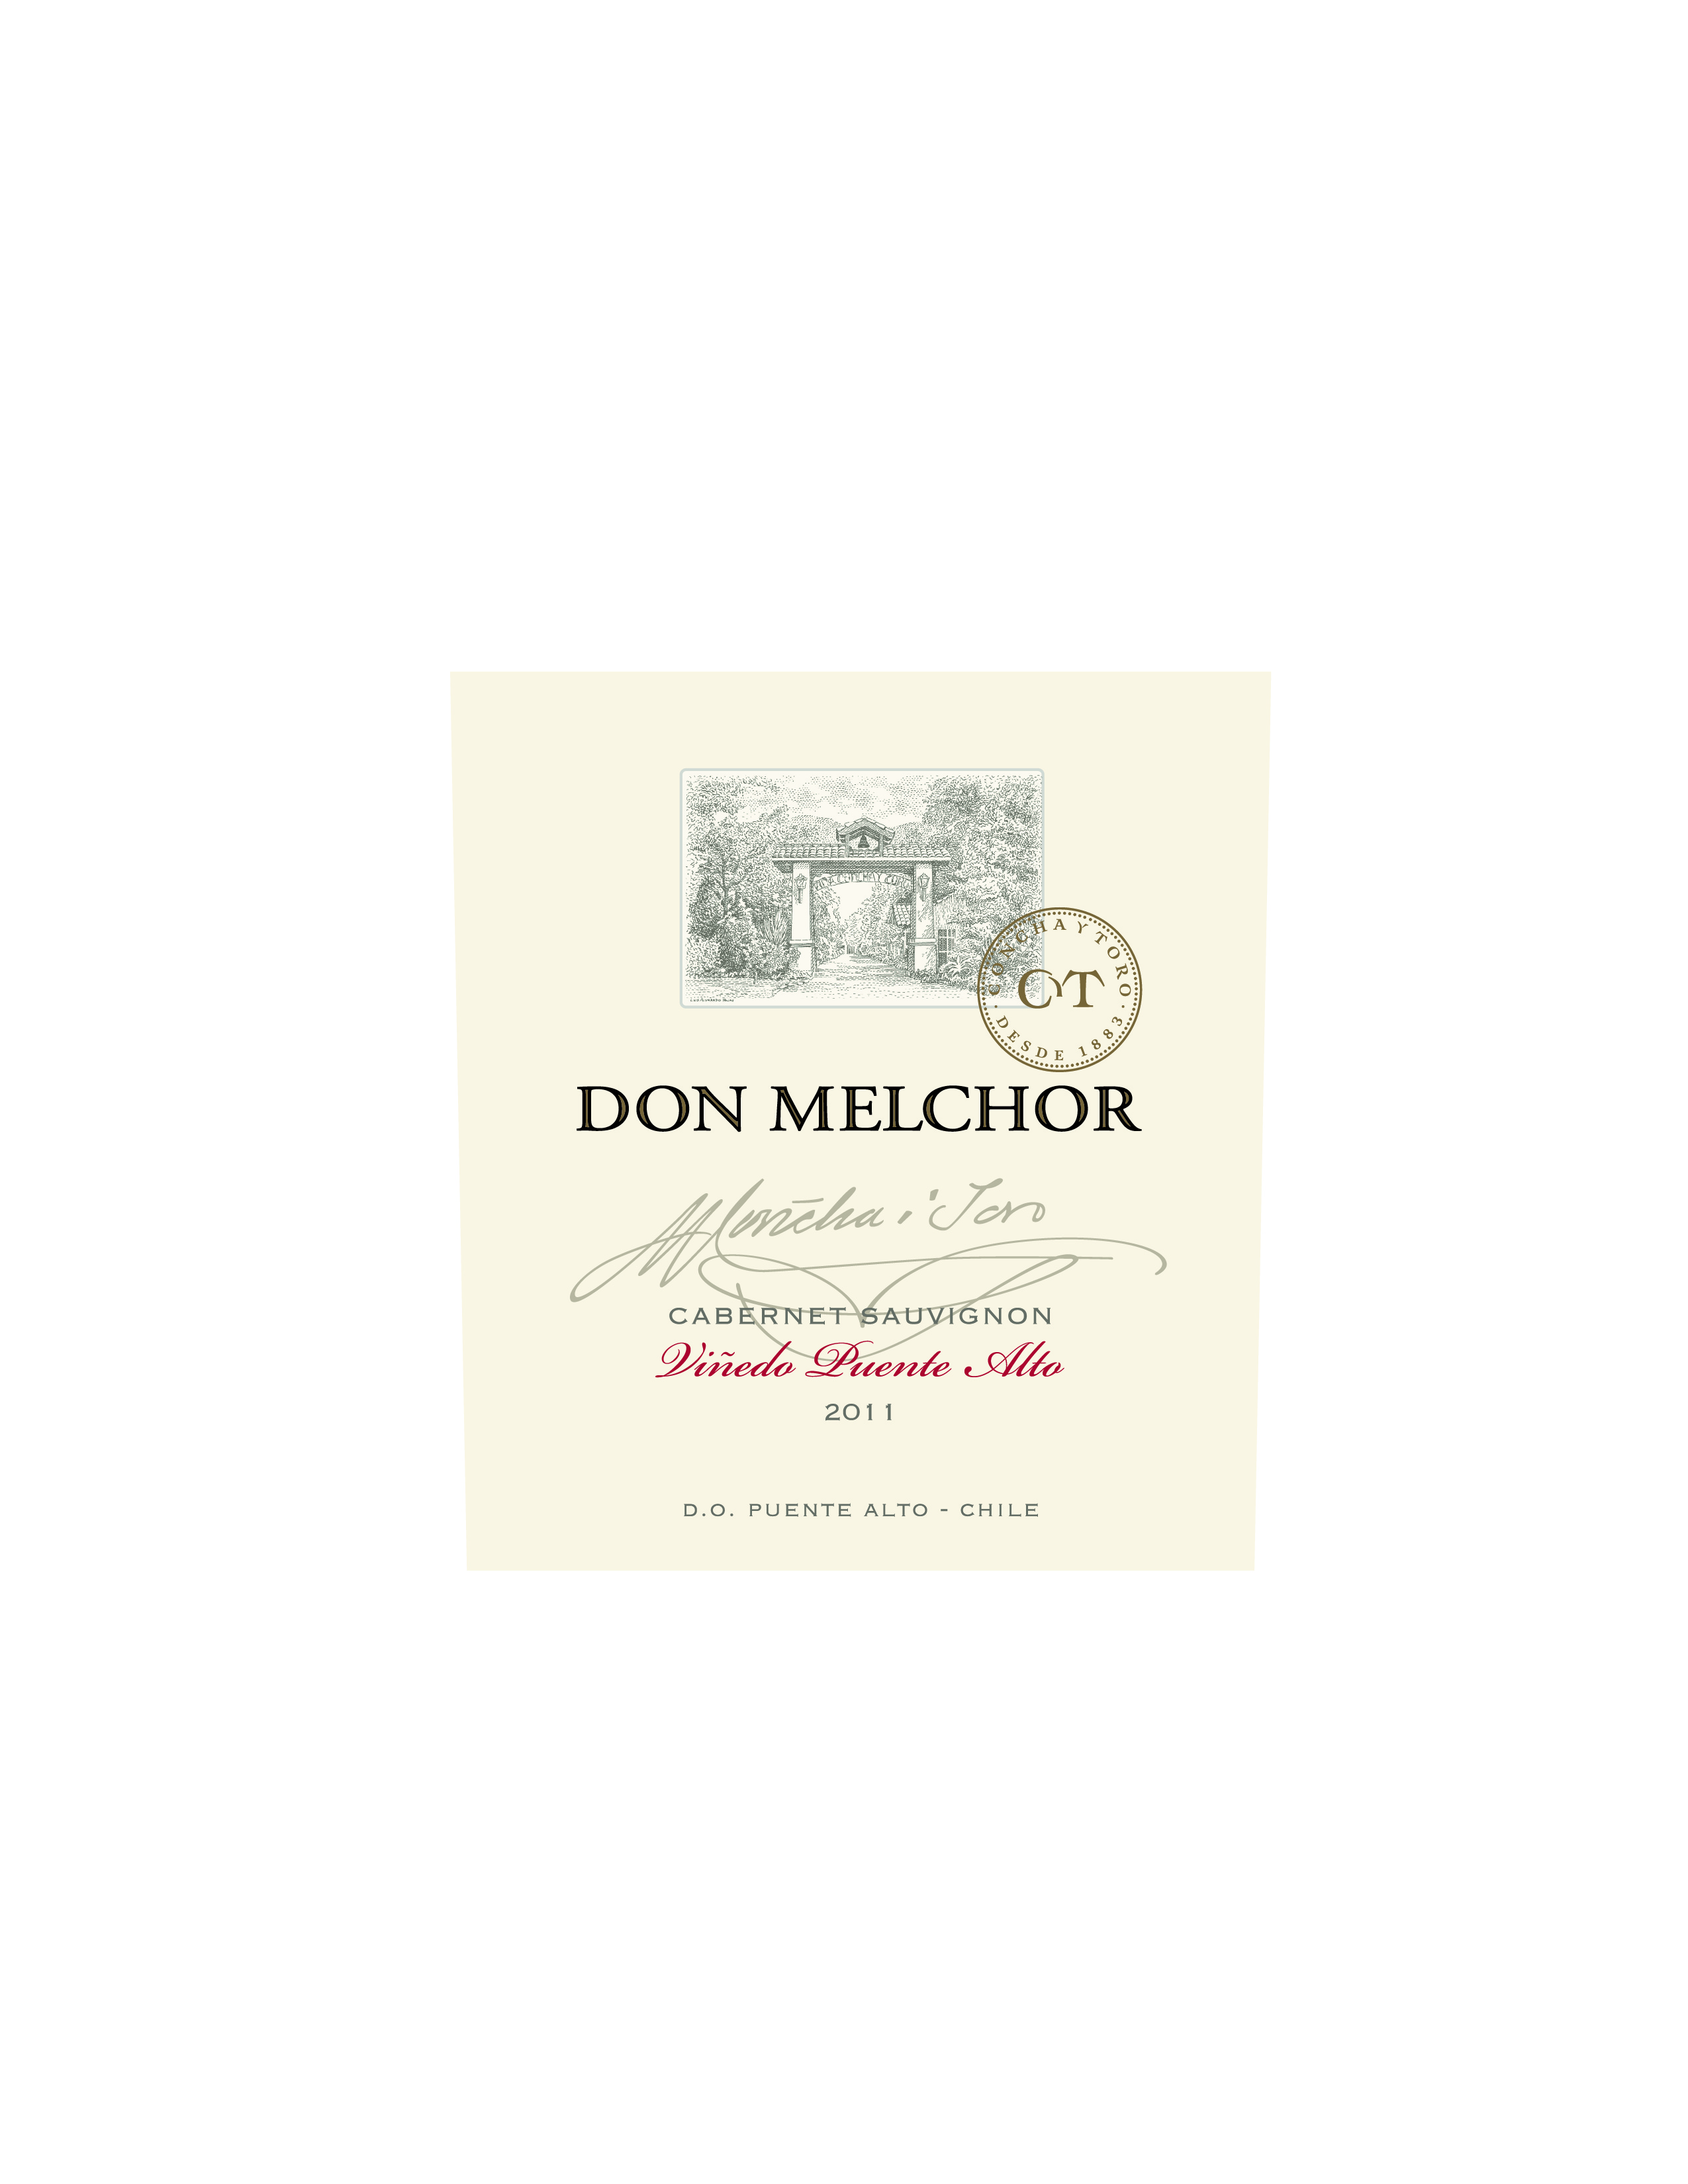 2016 Concha y Toro Don Melchor Cabernet Sauvignon, Puente Alto, Chile - click image for full description